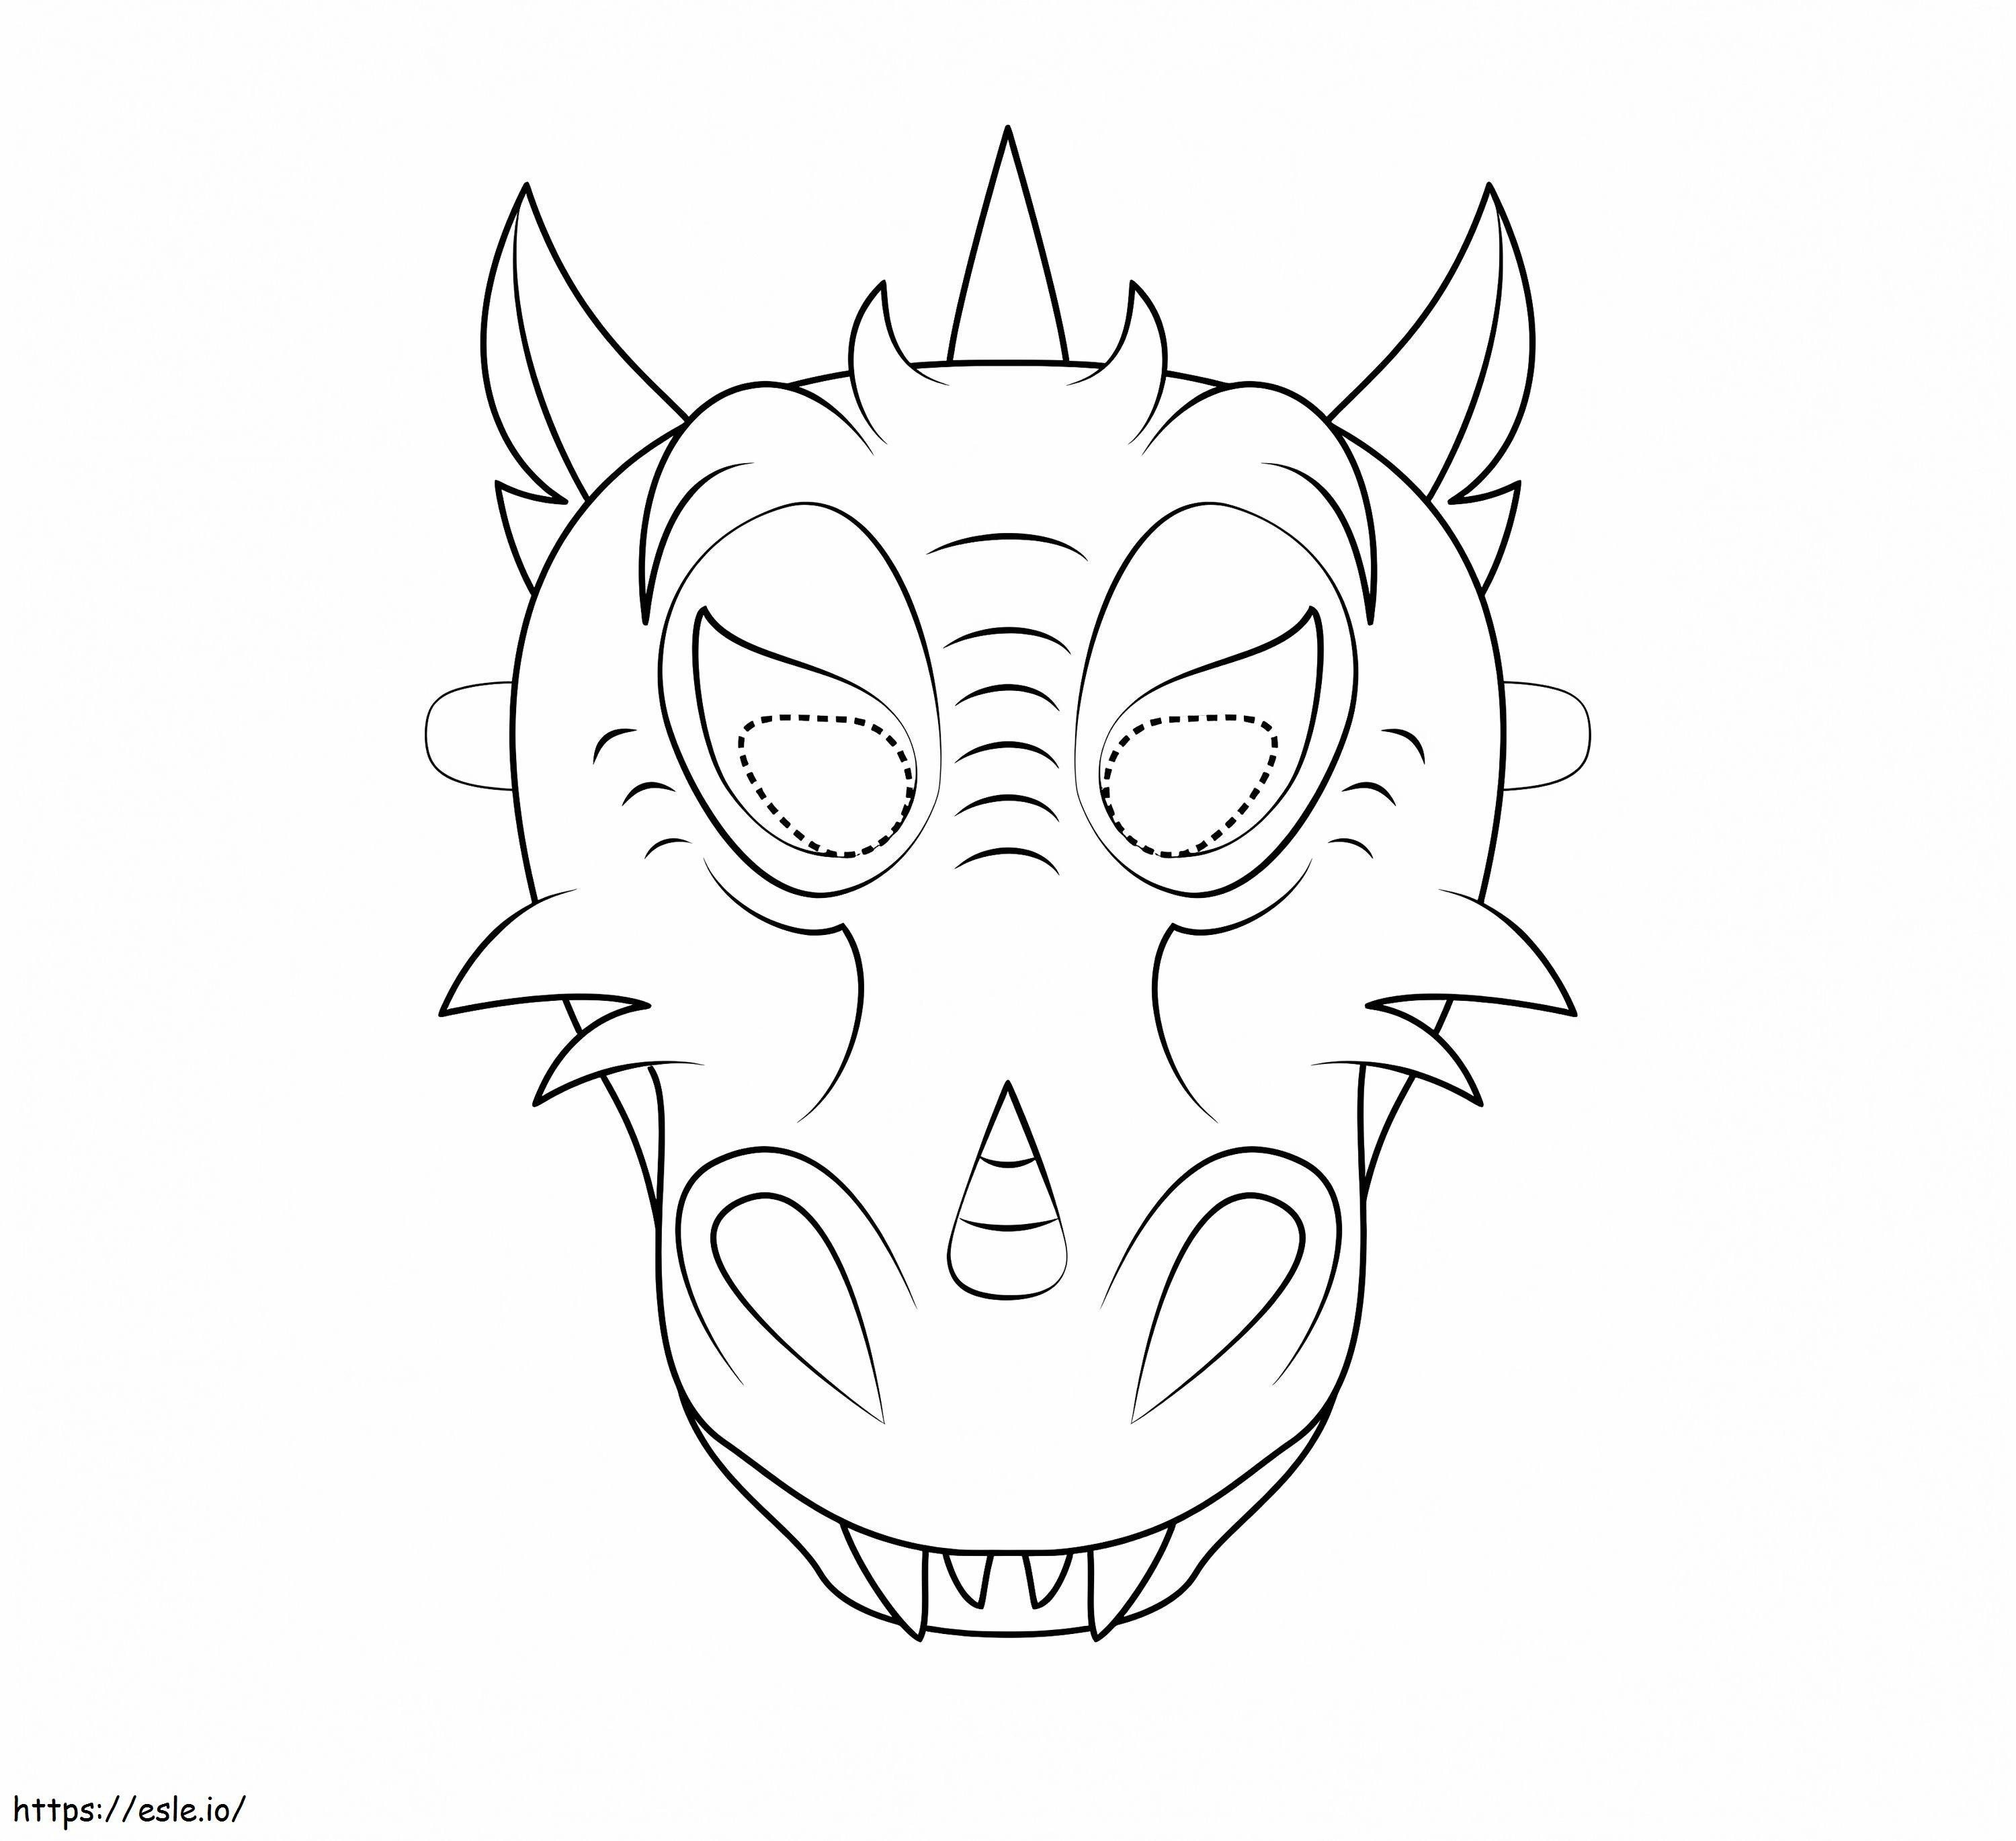 Coloriage 1559783104 Un masque de dragon A4 à imprimer dessin